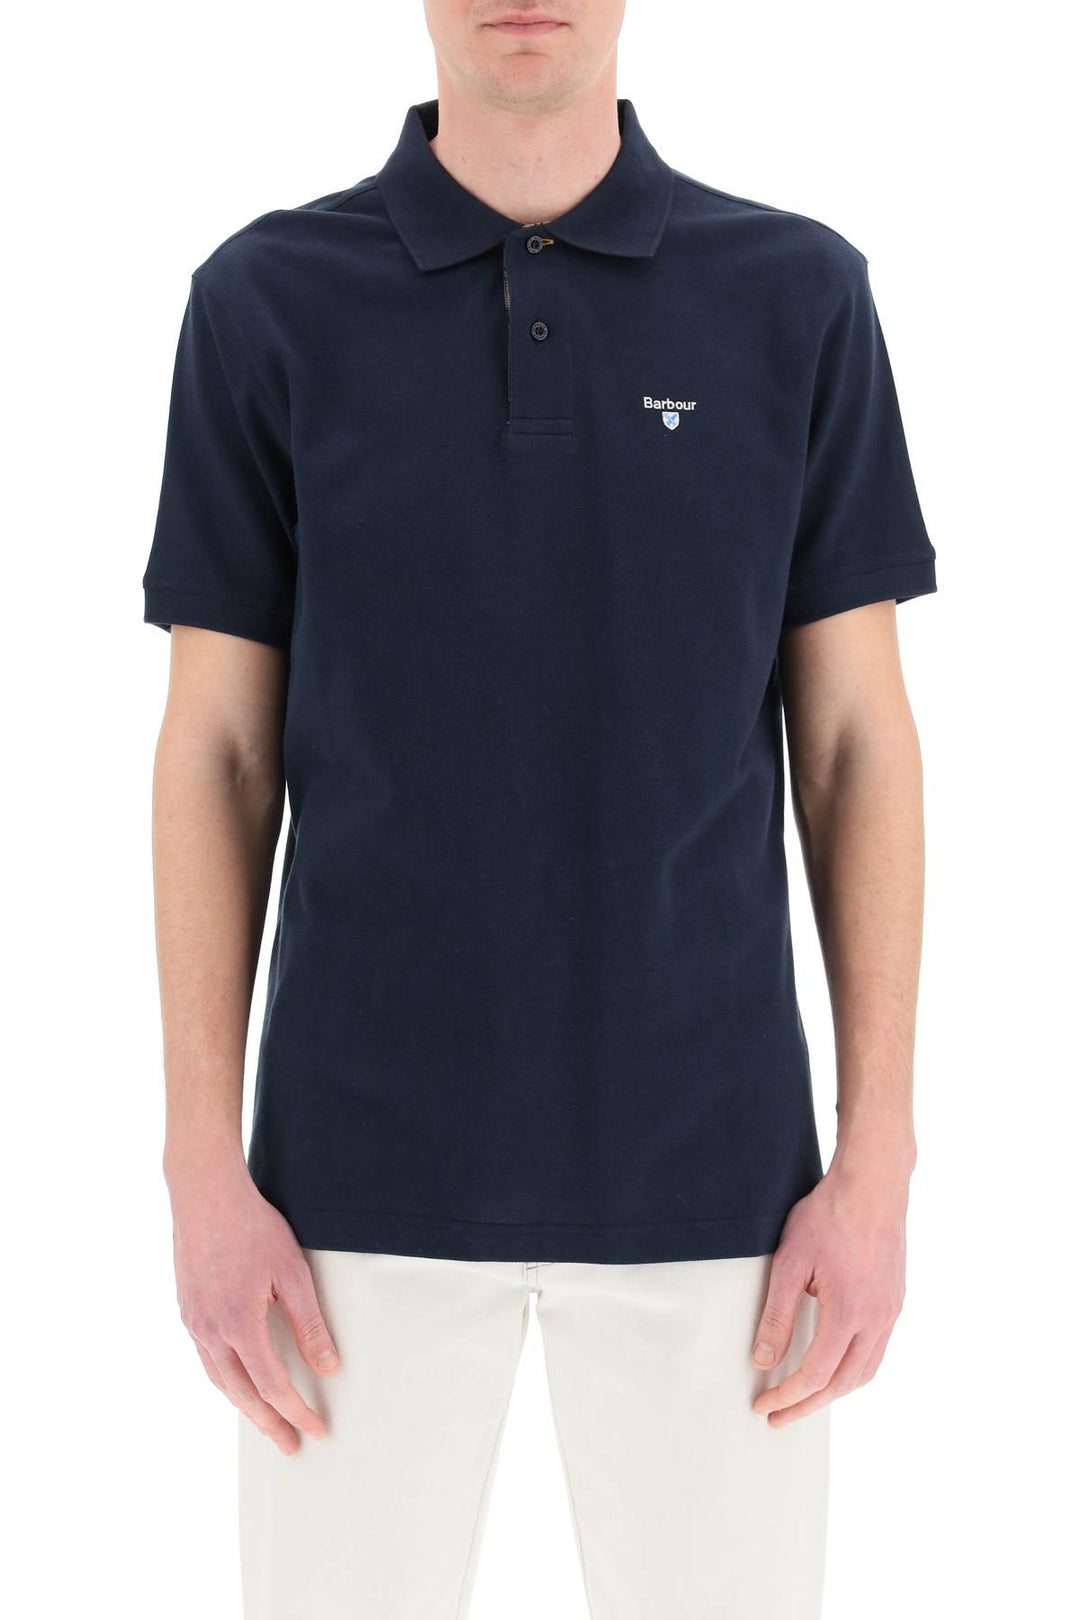 Barbour Tartan Trim Polo Shirt   Blu